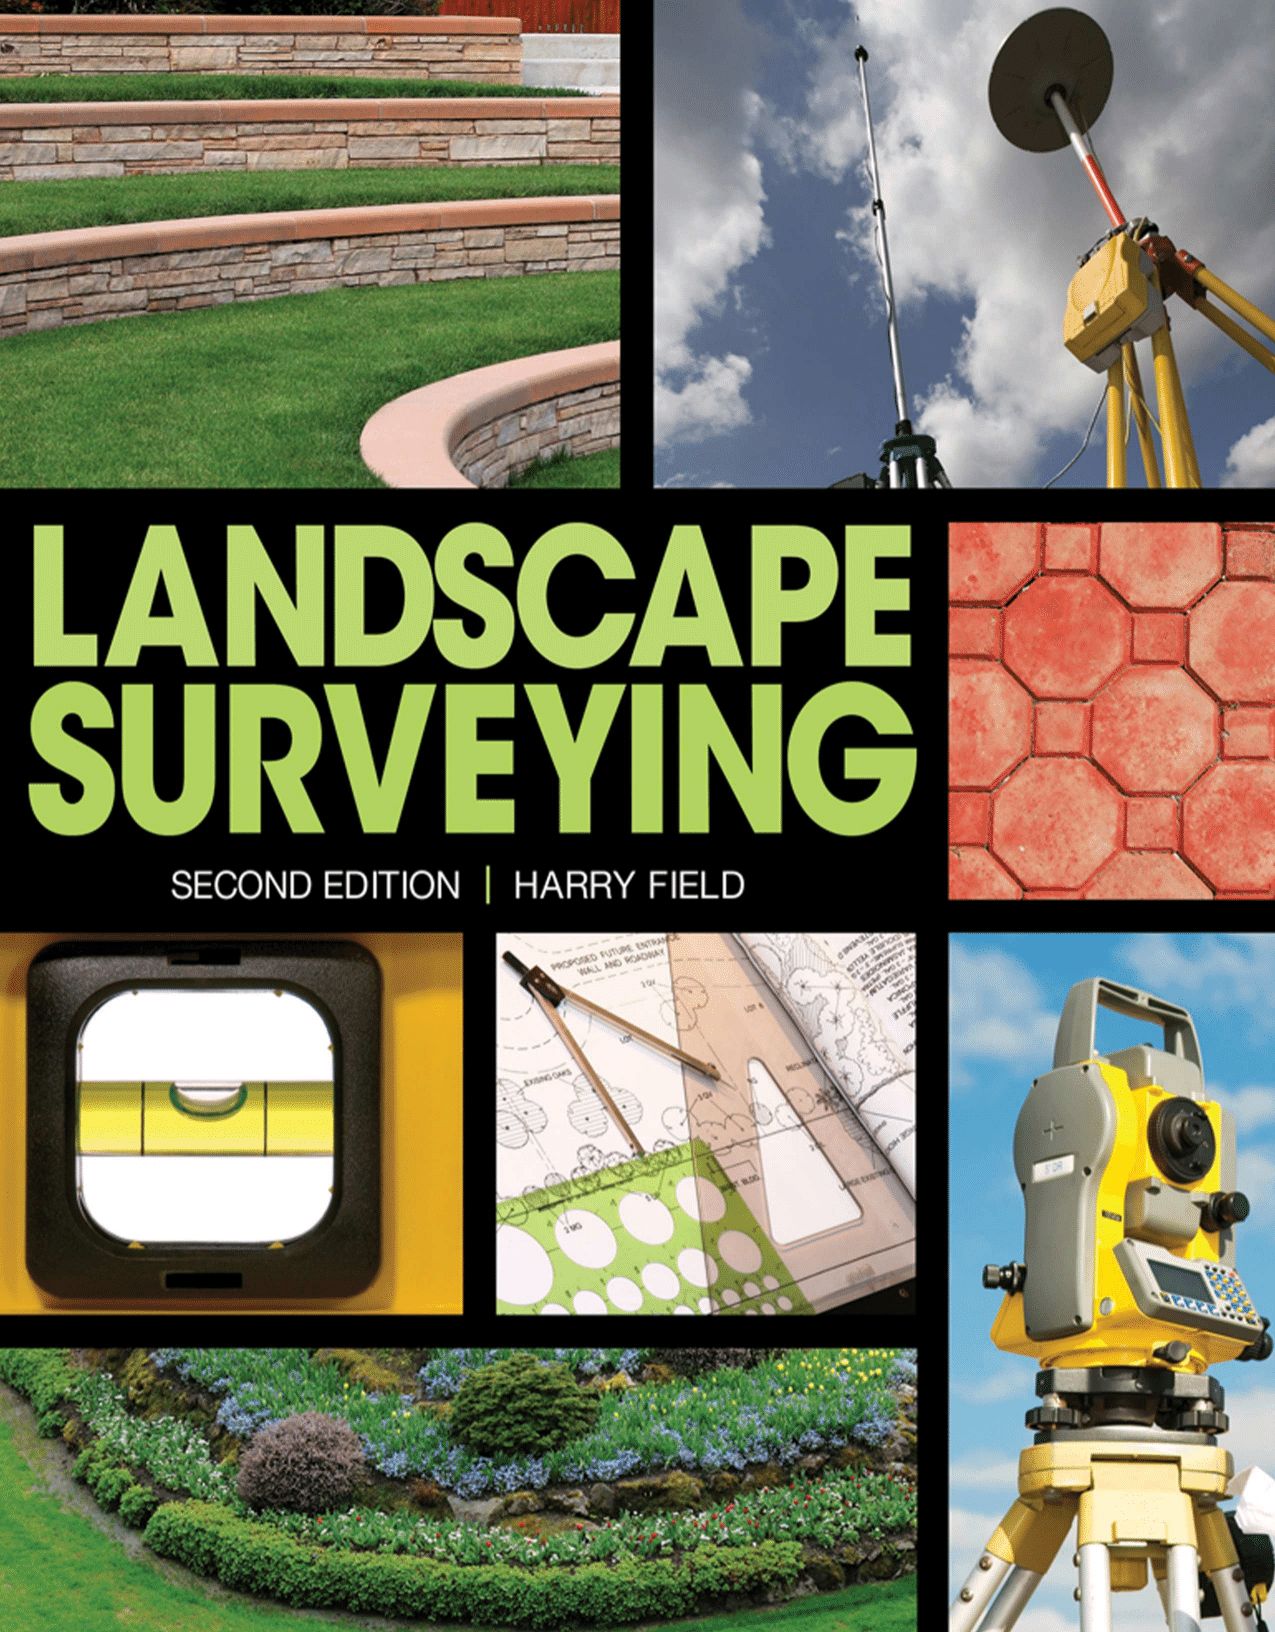 Landscape Surveying